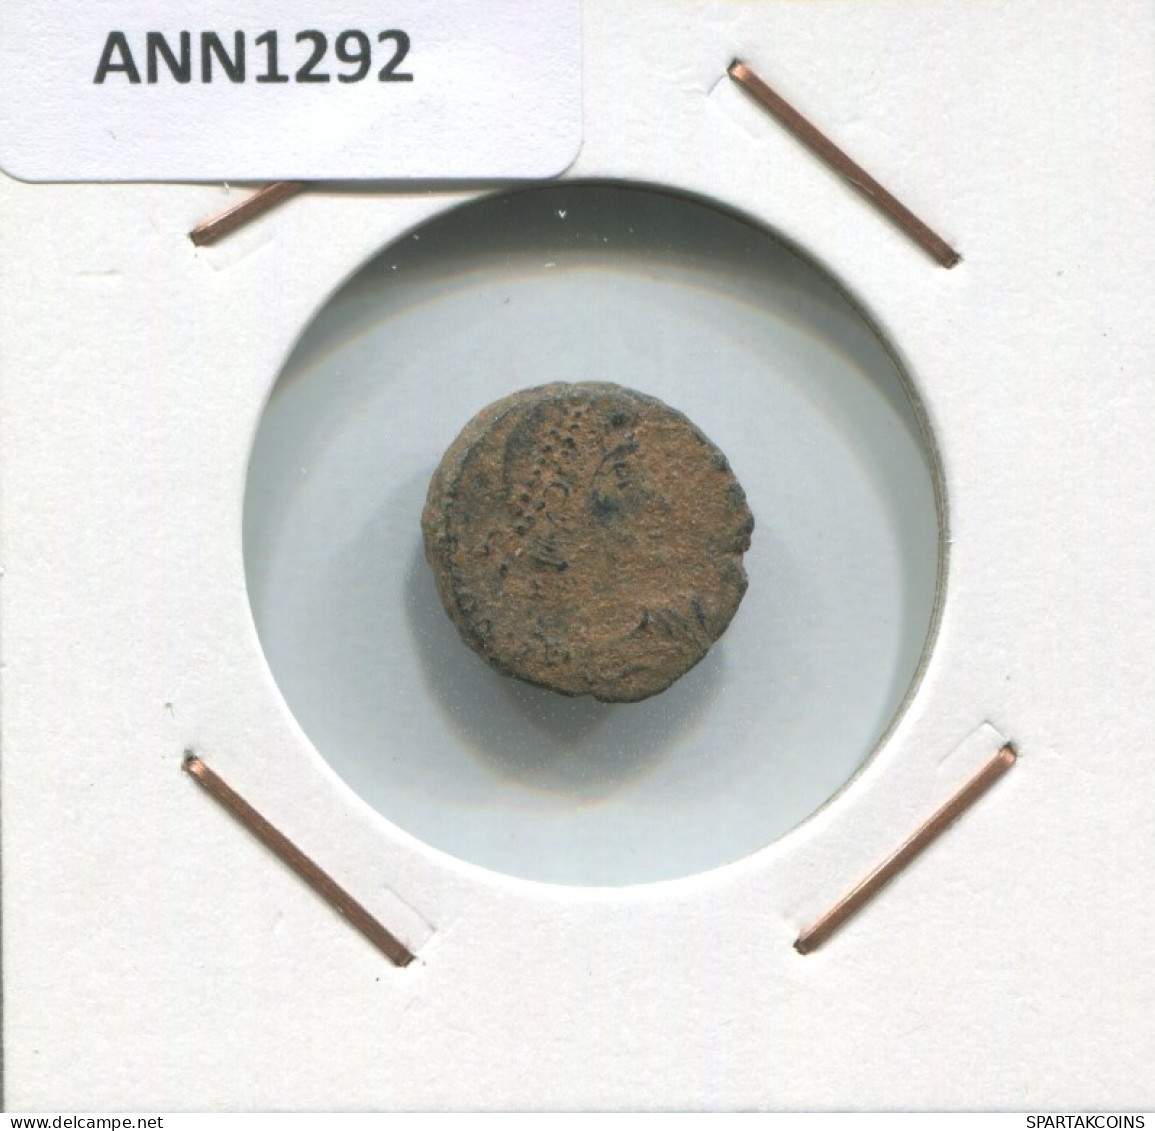 CONSTANTIUS II SISCIA SMAN AD324-337 GLORIA EXERCITVS 1.9g/14mm #ANN1292.9.U.A - El Impero Christiano (307 / 363)